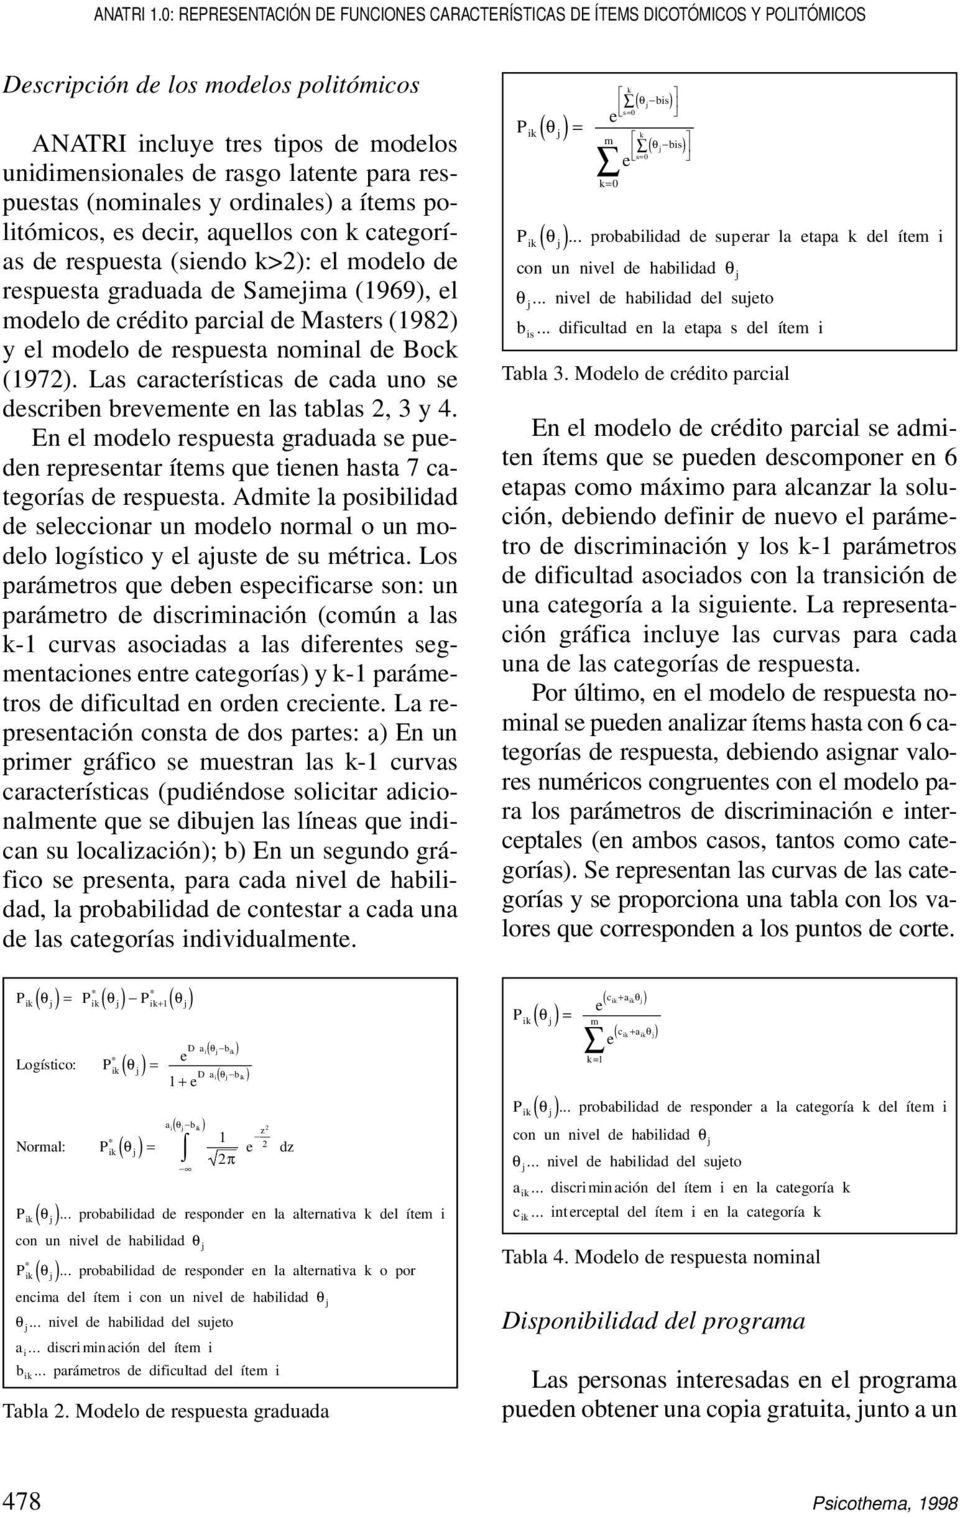 (nominals y ordinals) a ítms politómicos, s dcir, aqullos con k catgorías d rspusta (sindo k>): l modlo d rspusta graduada d Samjima (969), l modlo d crédito parcial d Mastrs (98) y l modlo d rspusta